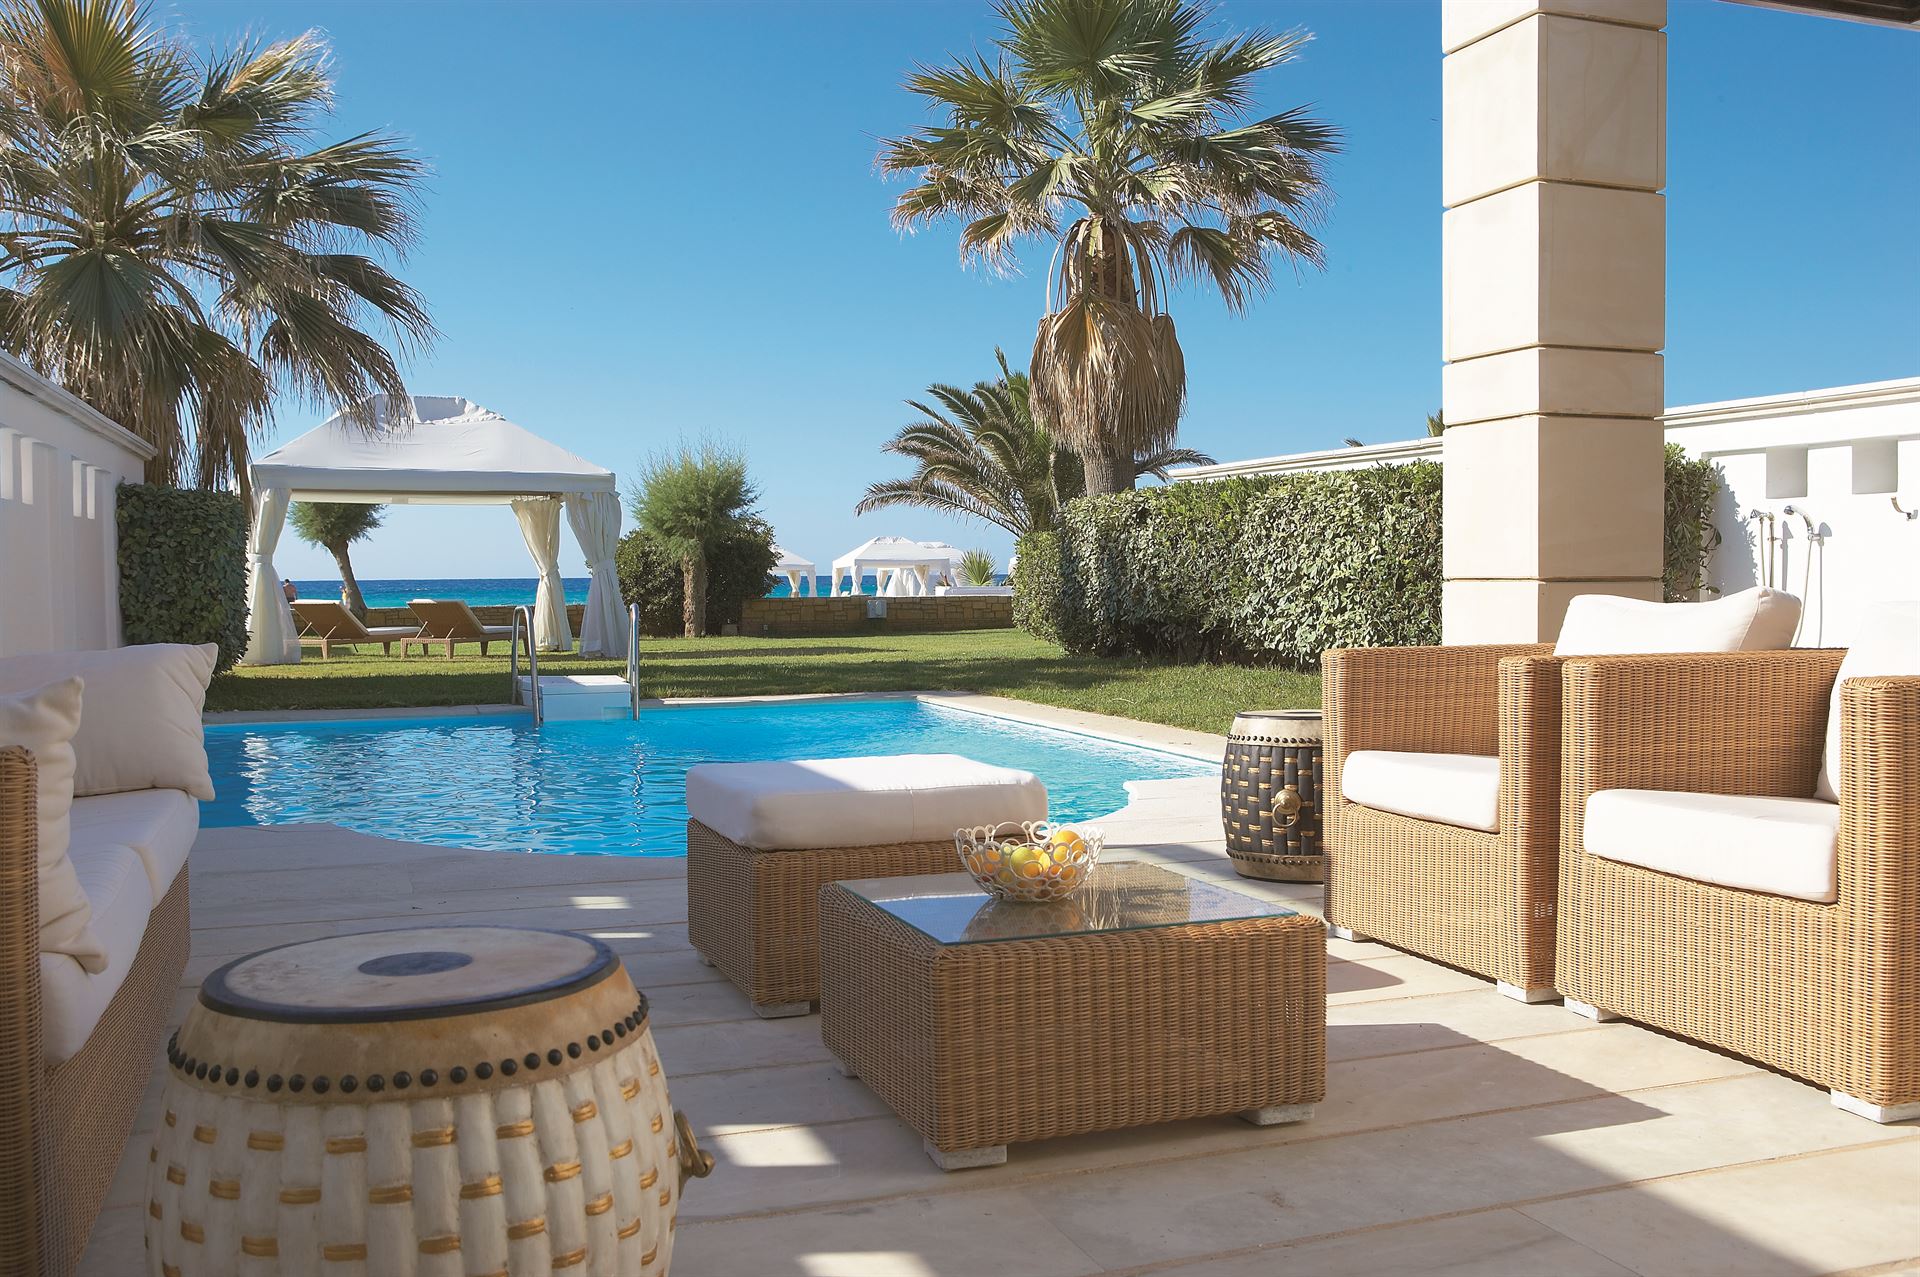 Grecotel Creta Palace Luxury Resort: Deluxe 1 Bedroom Bgl Suite PP